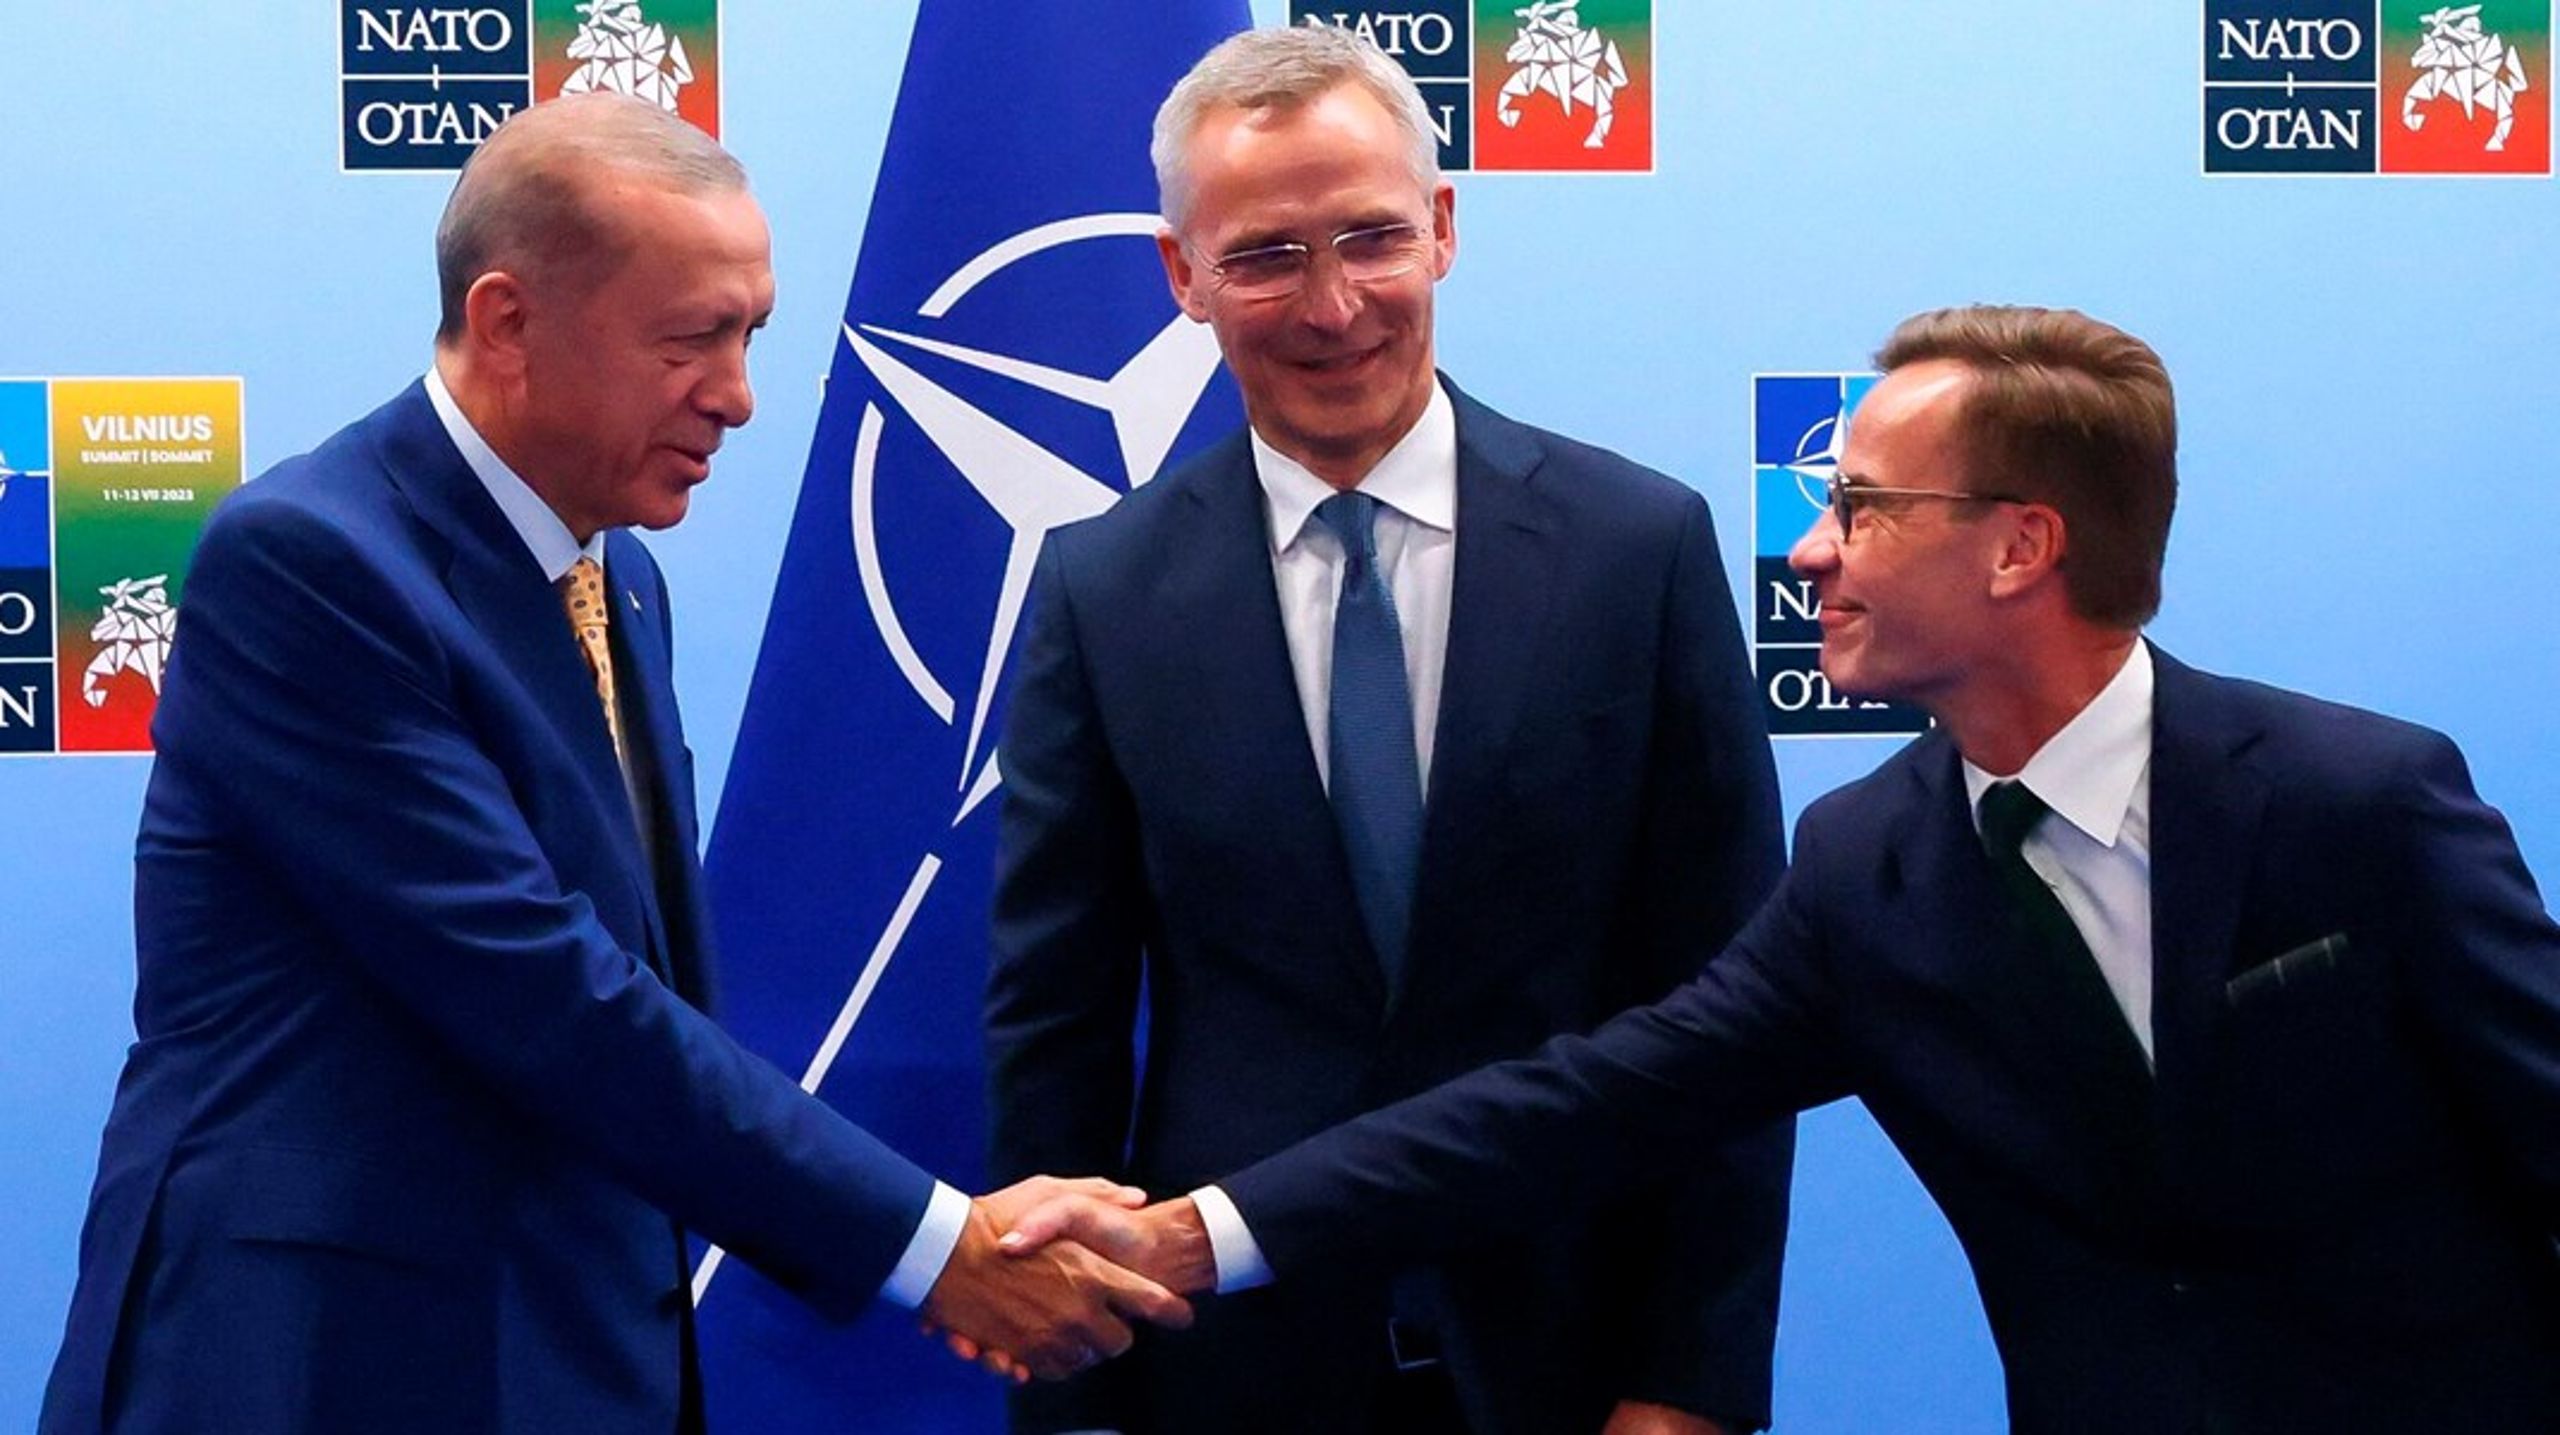 Ulf Kristersson og Recep Tayyip Erdogan giver hånd i Vilnius.&nbsp;